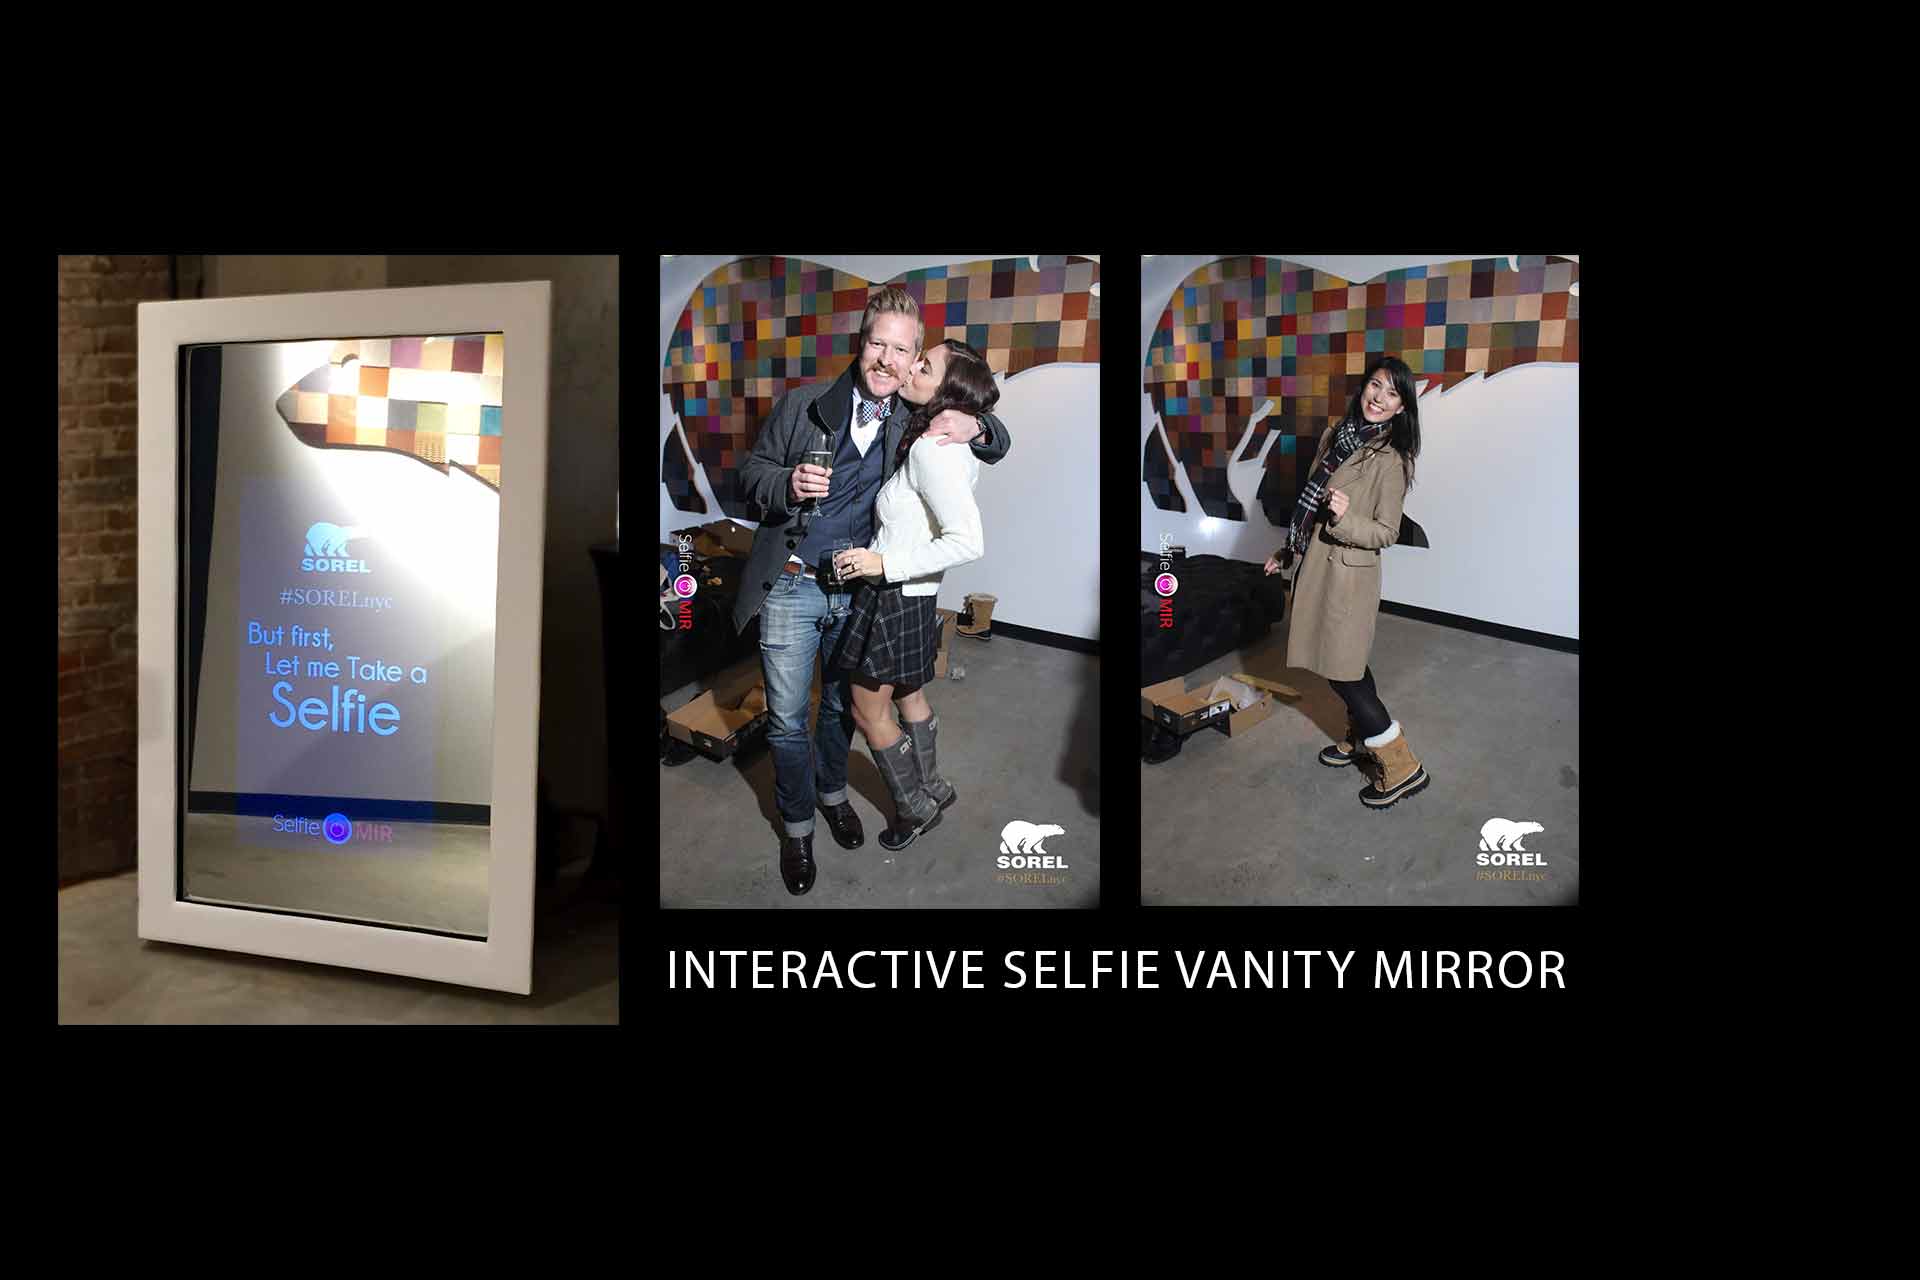 SelfieMIR Interactive Selfie Vanity Mirror aka Twitter Mirror